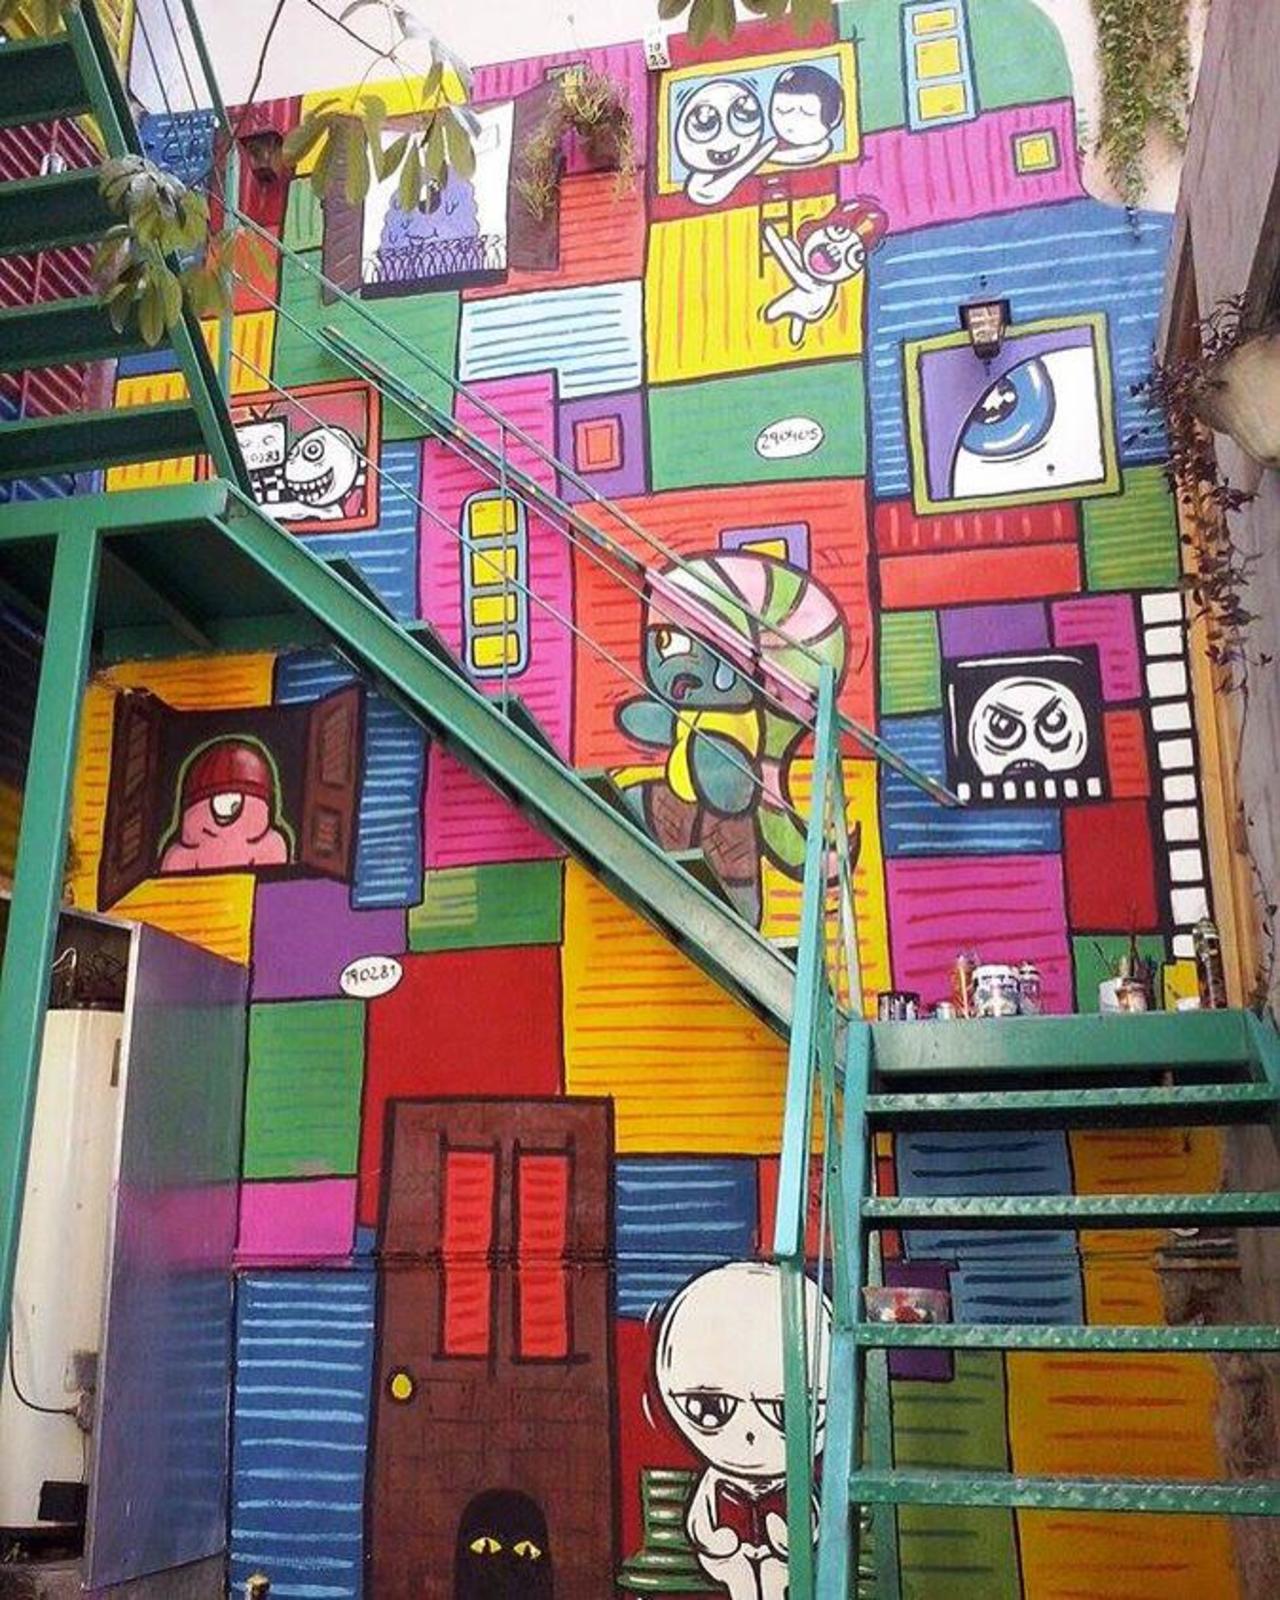 By @ nataliamolinero, Choco & GreenPink in Argentina
http://blog.globalstreetart.com/post/130400540941/by-nataliamolinero-choco-and-greenpink-in
#streetart #urbanart #graffiti http://t.co/JBjEfAkxHi